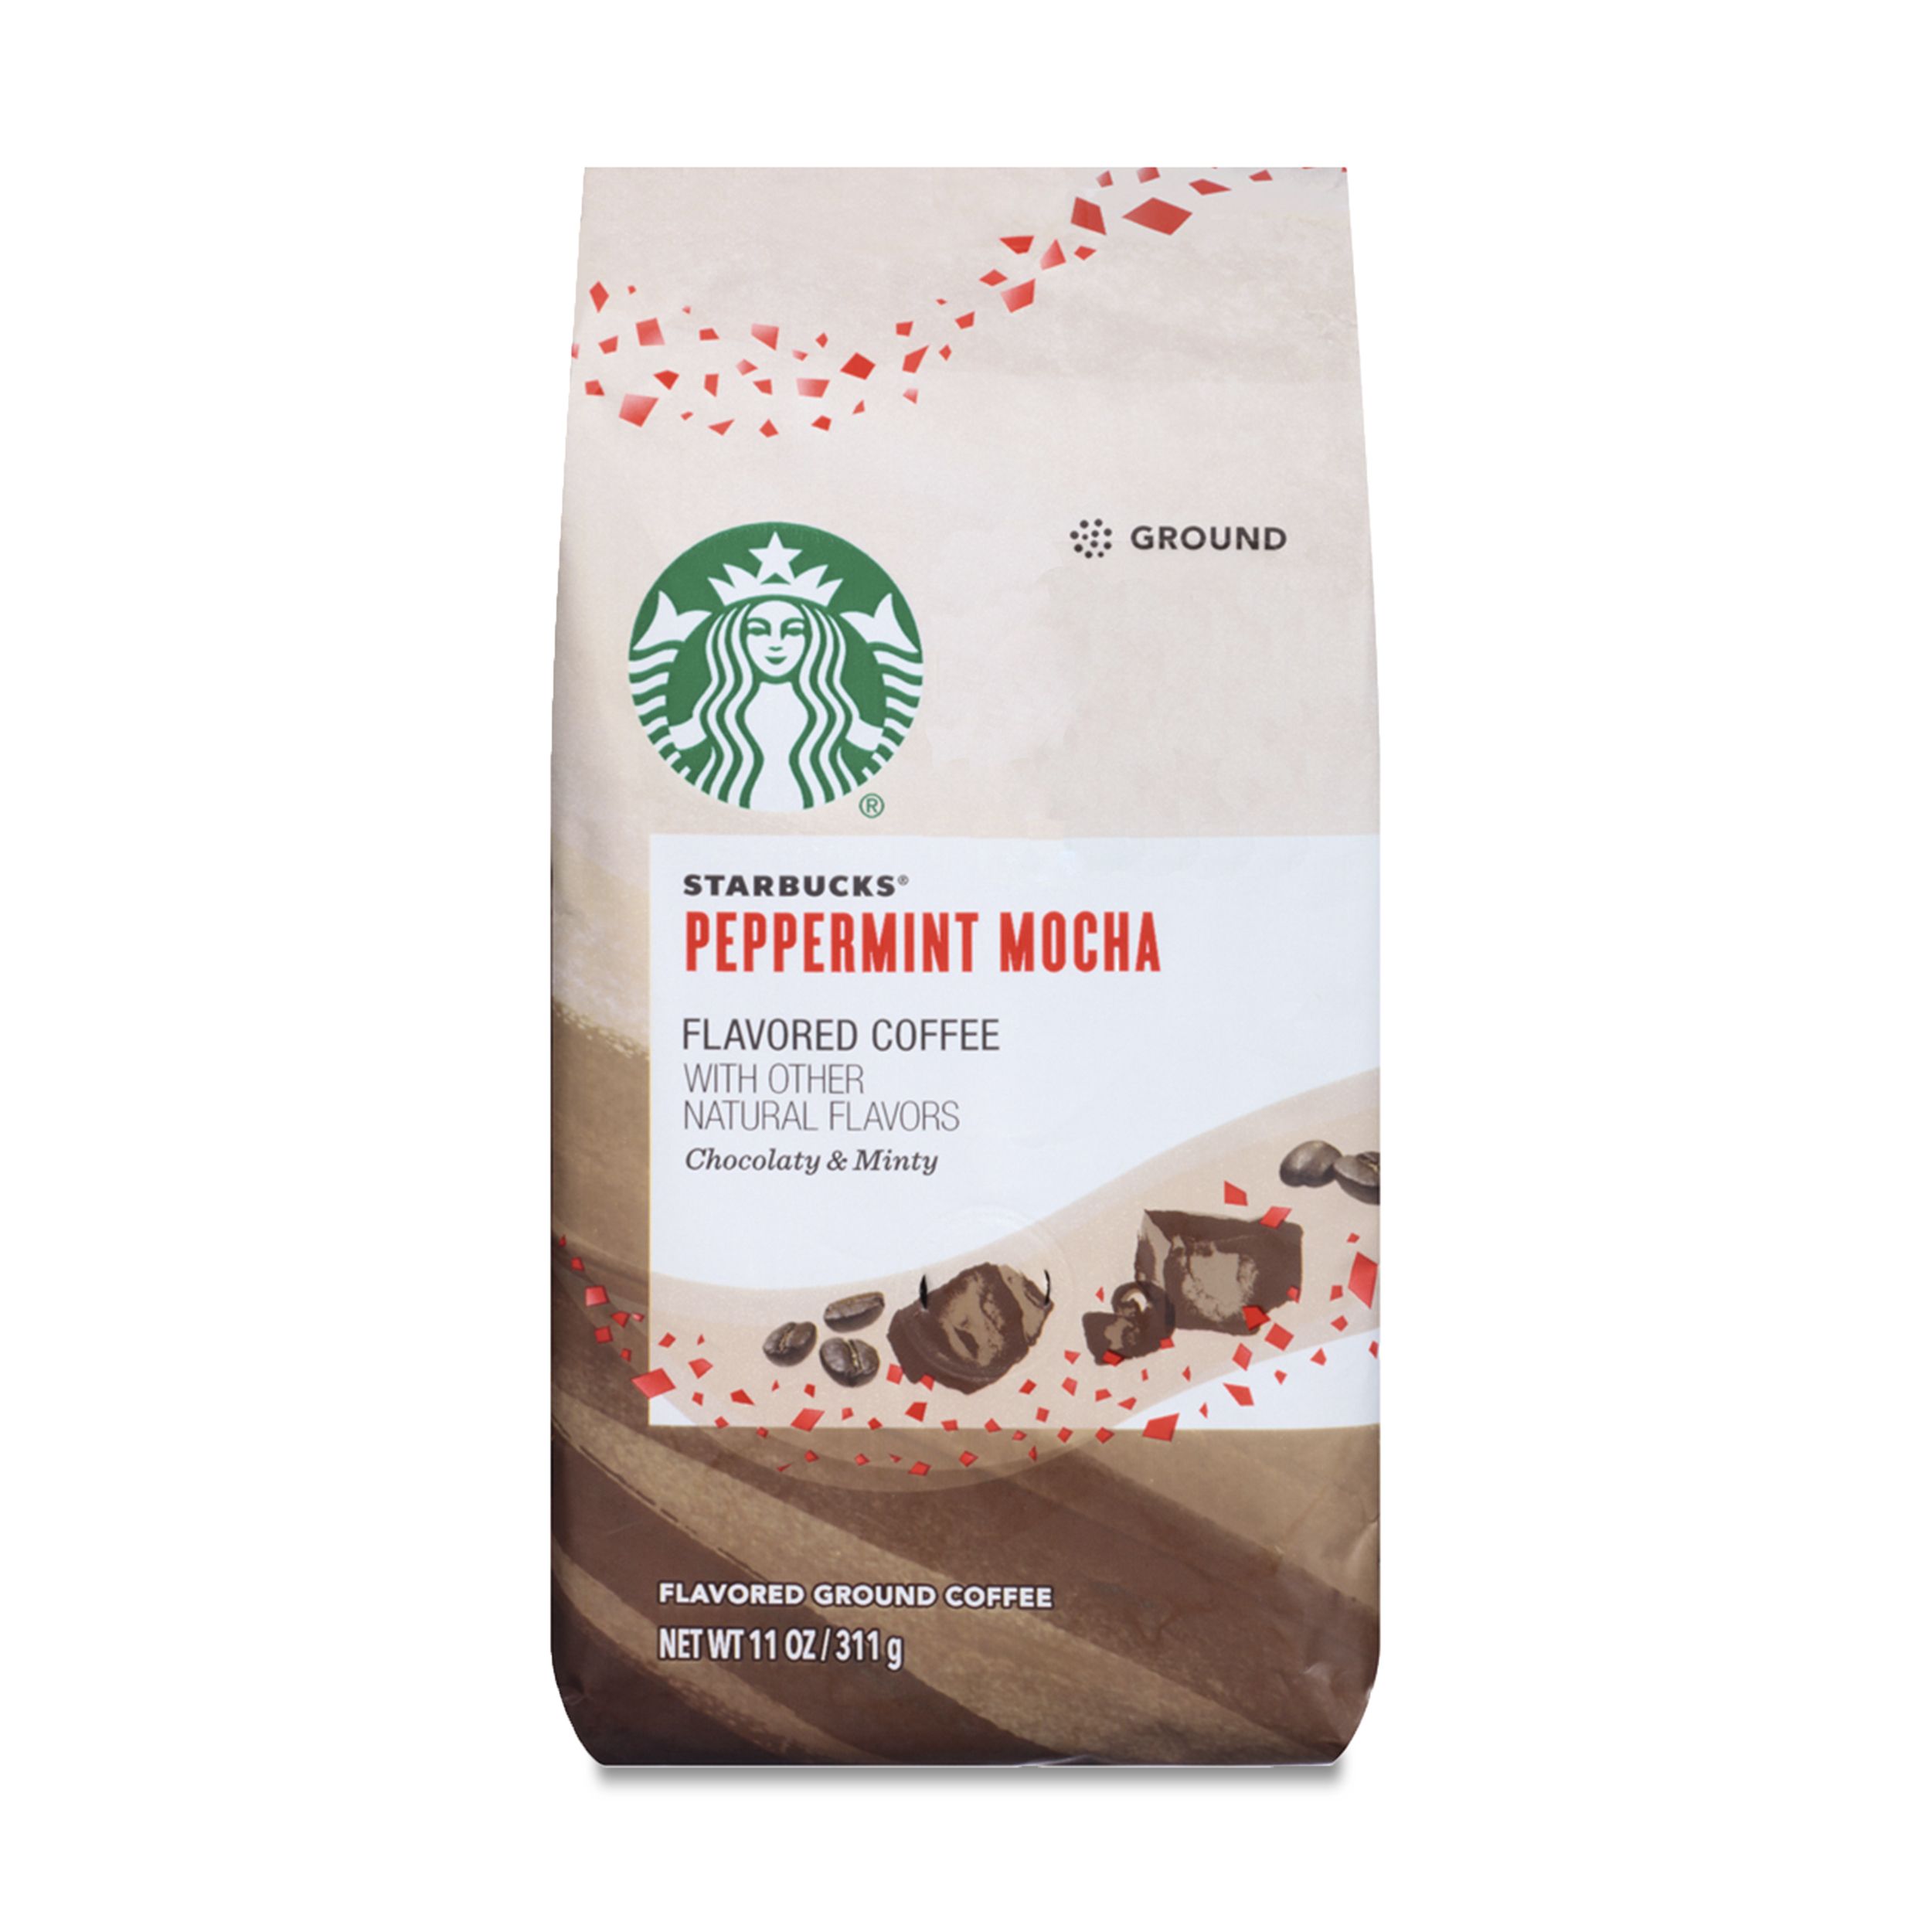 Starbucks Peppermint Mocha Ground Coffee